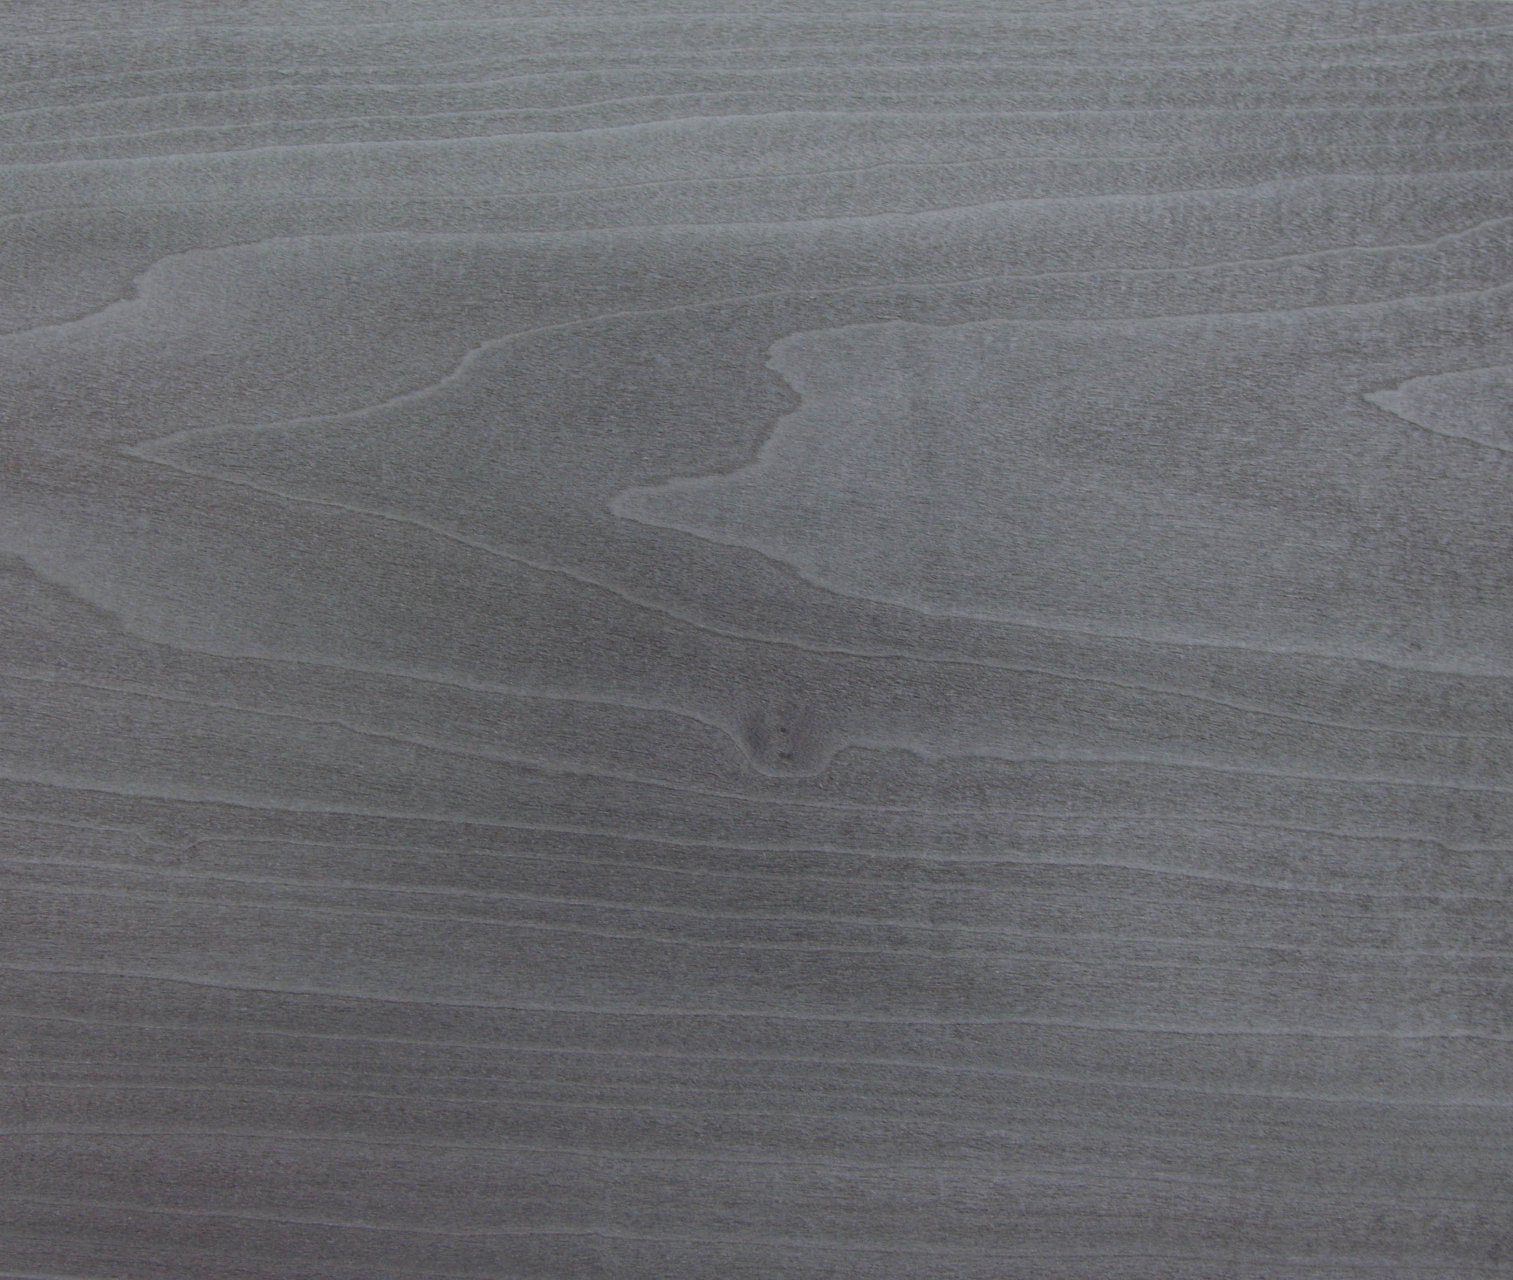 0,6mm Tulpenbaum silbergrau gefärbtes Furnier 1,05m² H 14 30 25